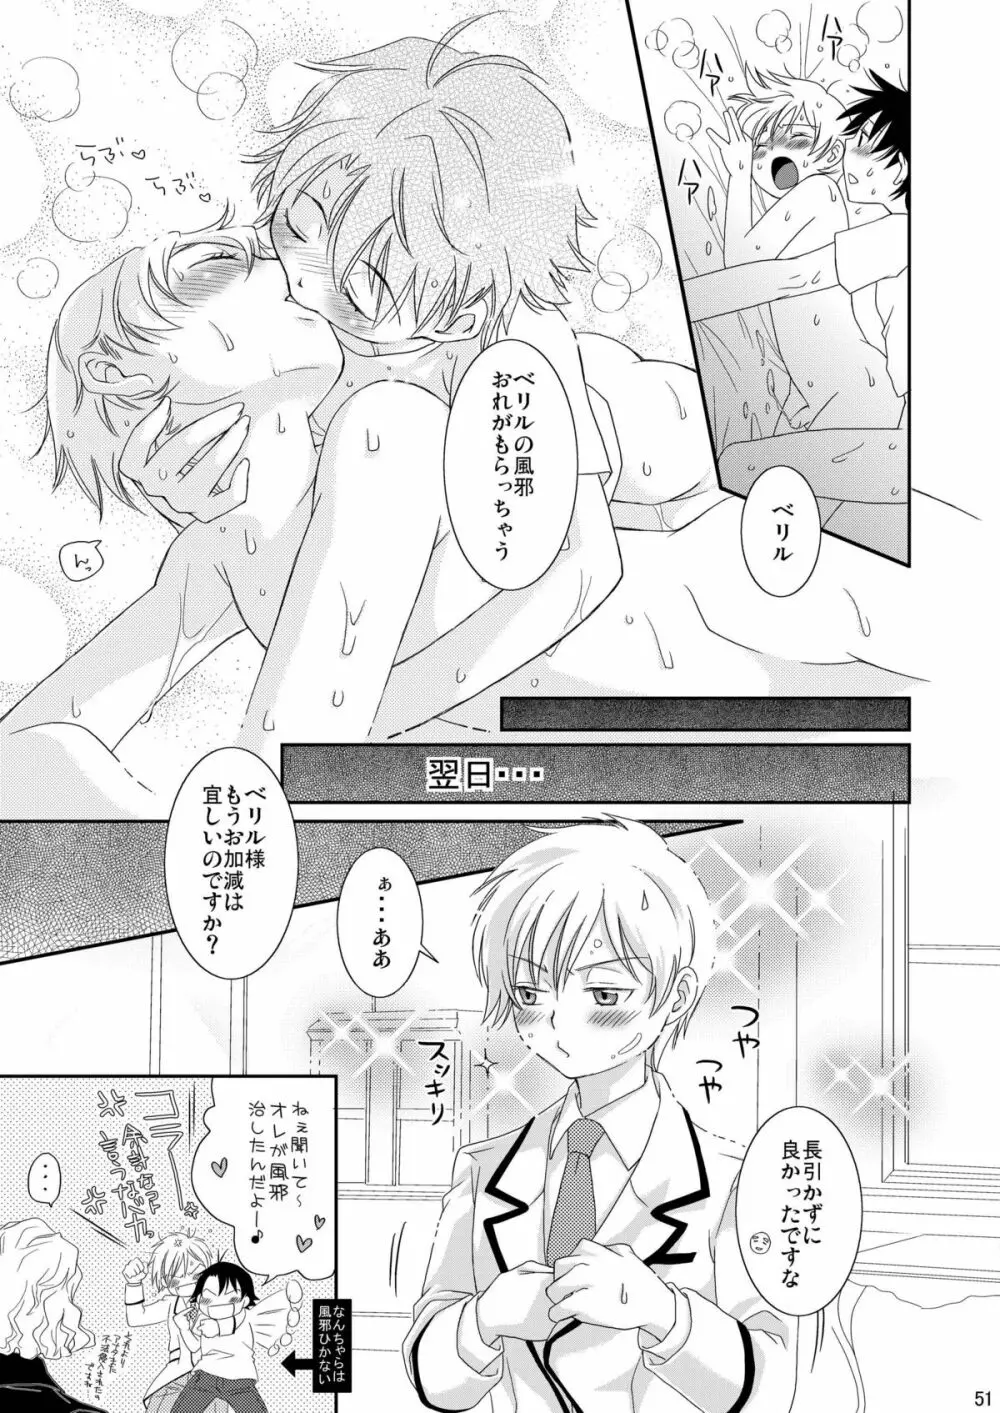 Re: ぷれい2 - page51